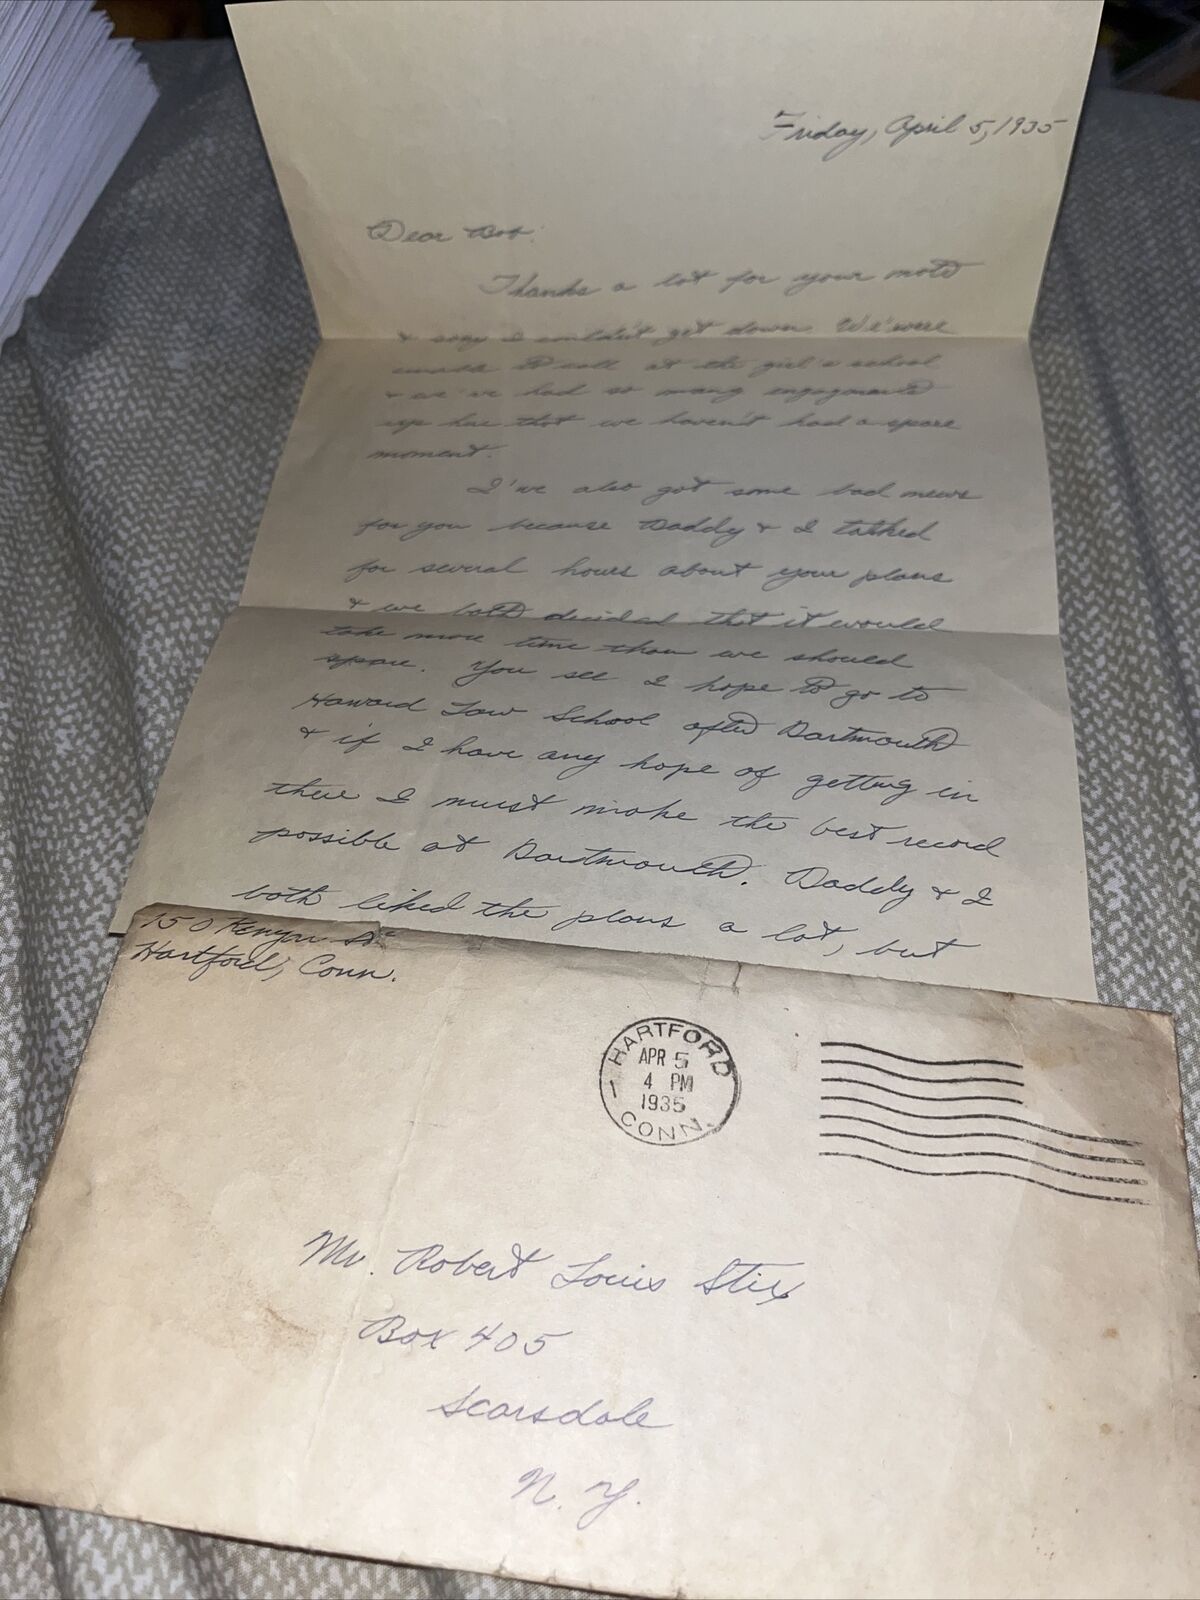 1935 Depression Era Dartmouth College Student Letter, Desires Harvard Law School